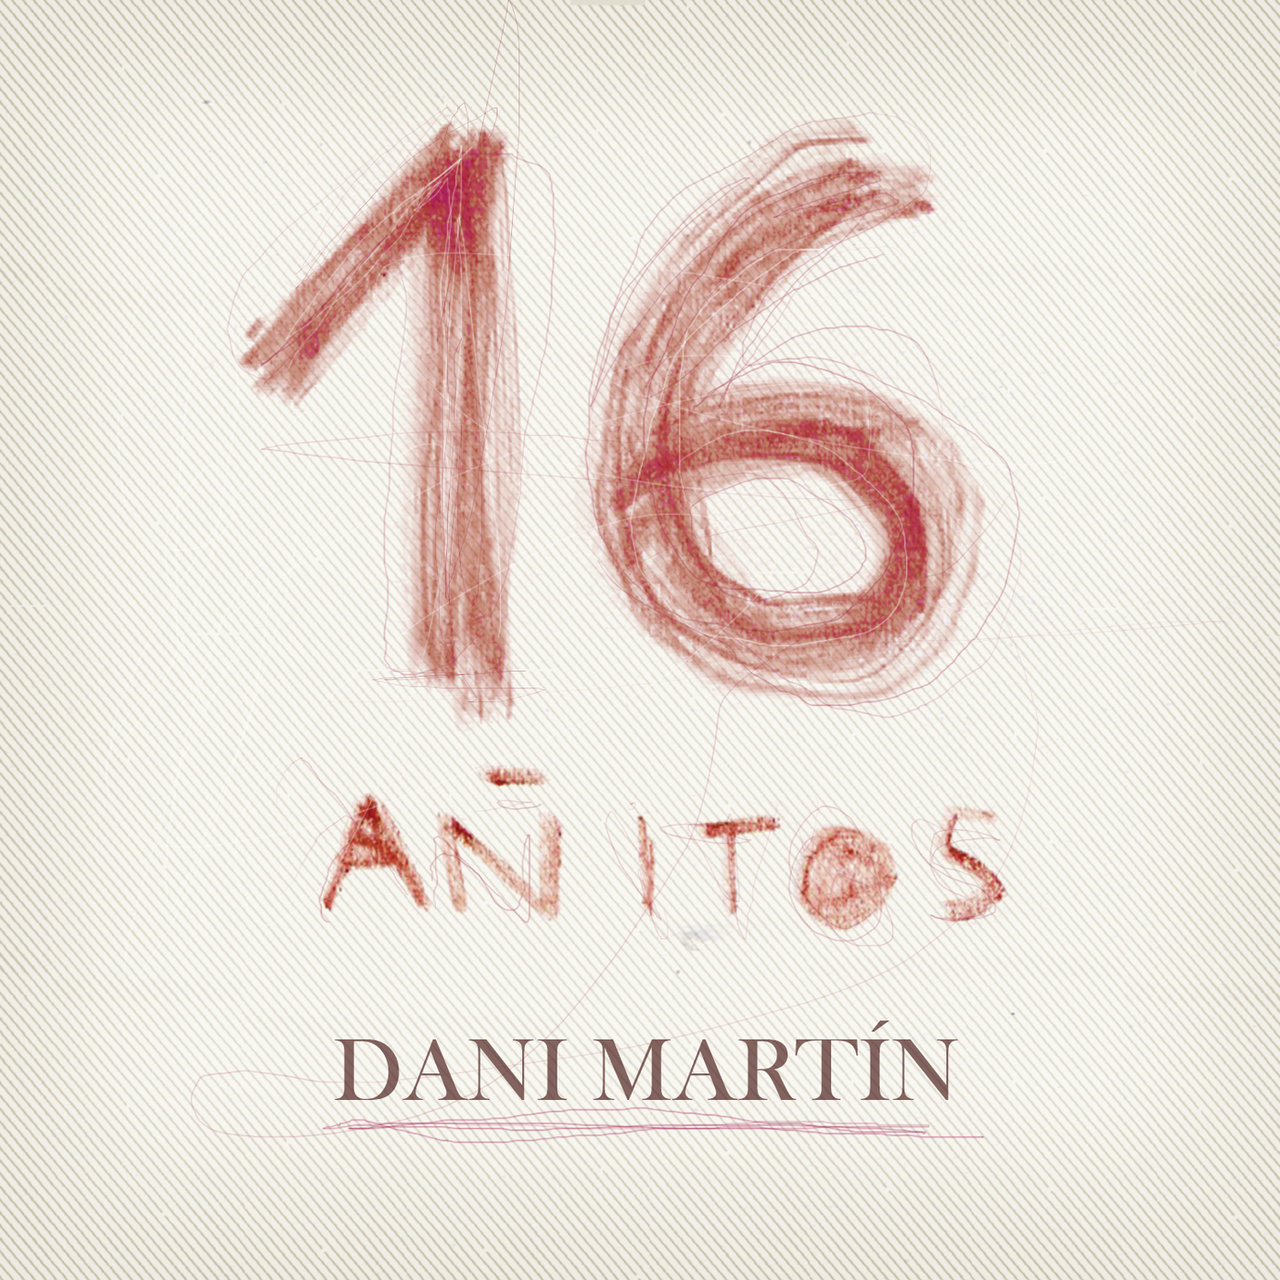 Dani Martín 16 Añitos cover artwork